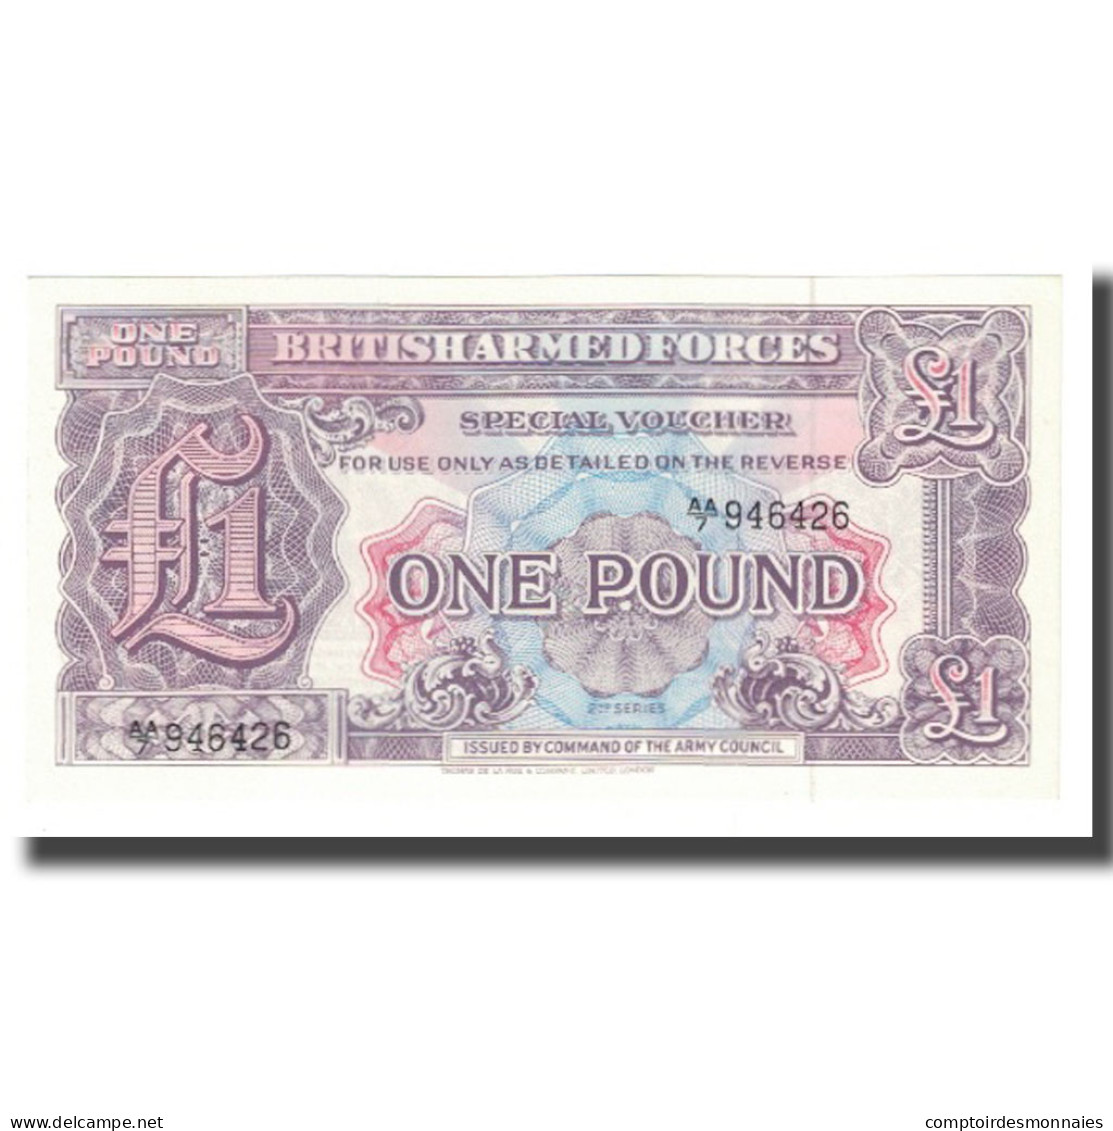 Billet, Grande-Bretagne, 1 Pound, KM:M22a, NEUF - British Armed Forces & Special Vouchers